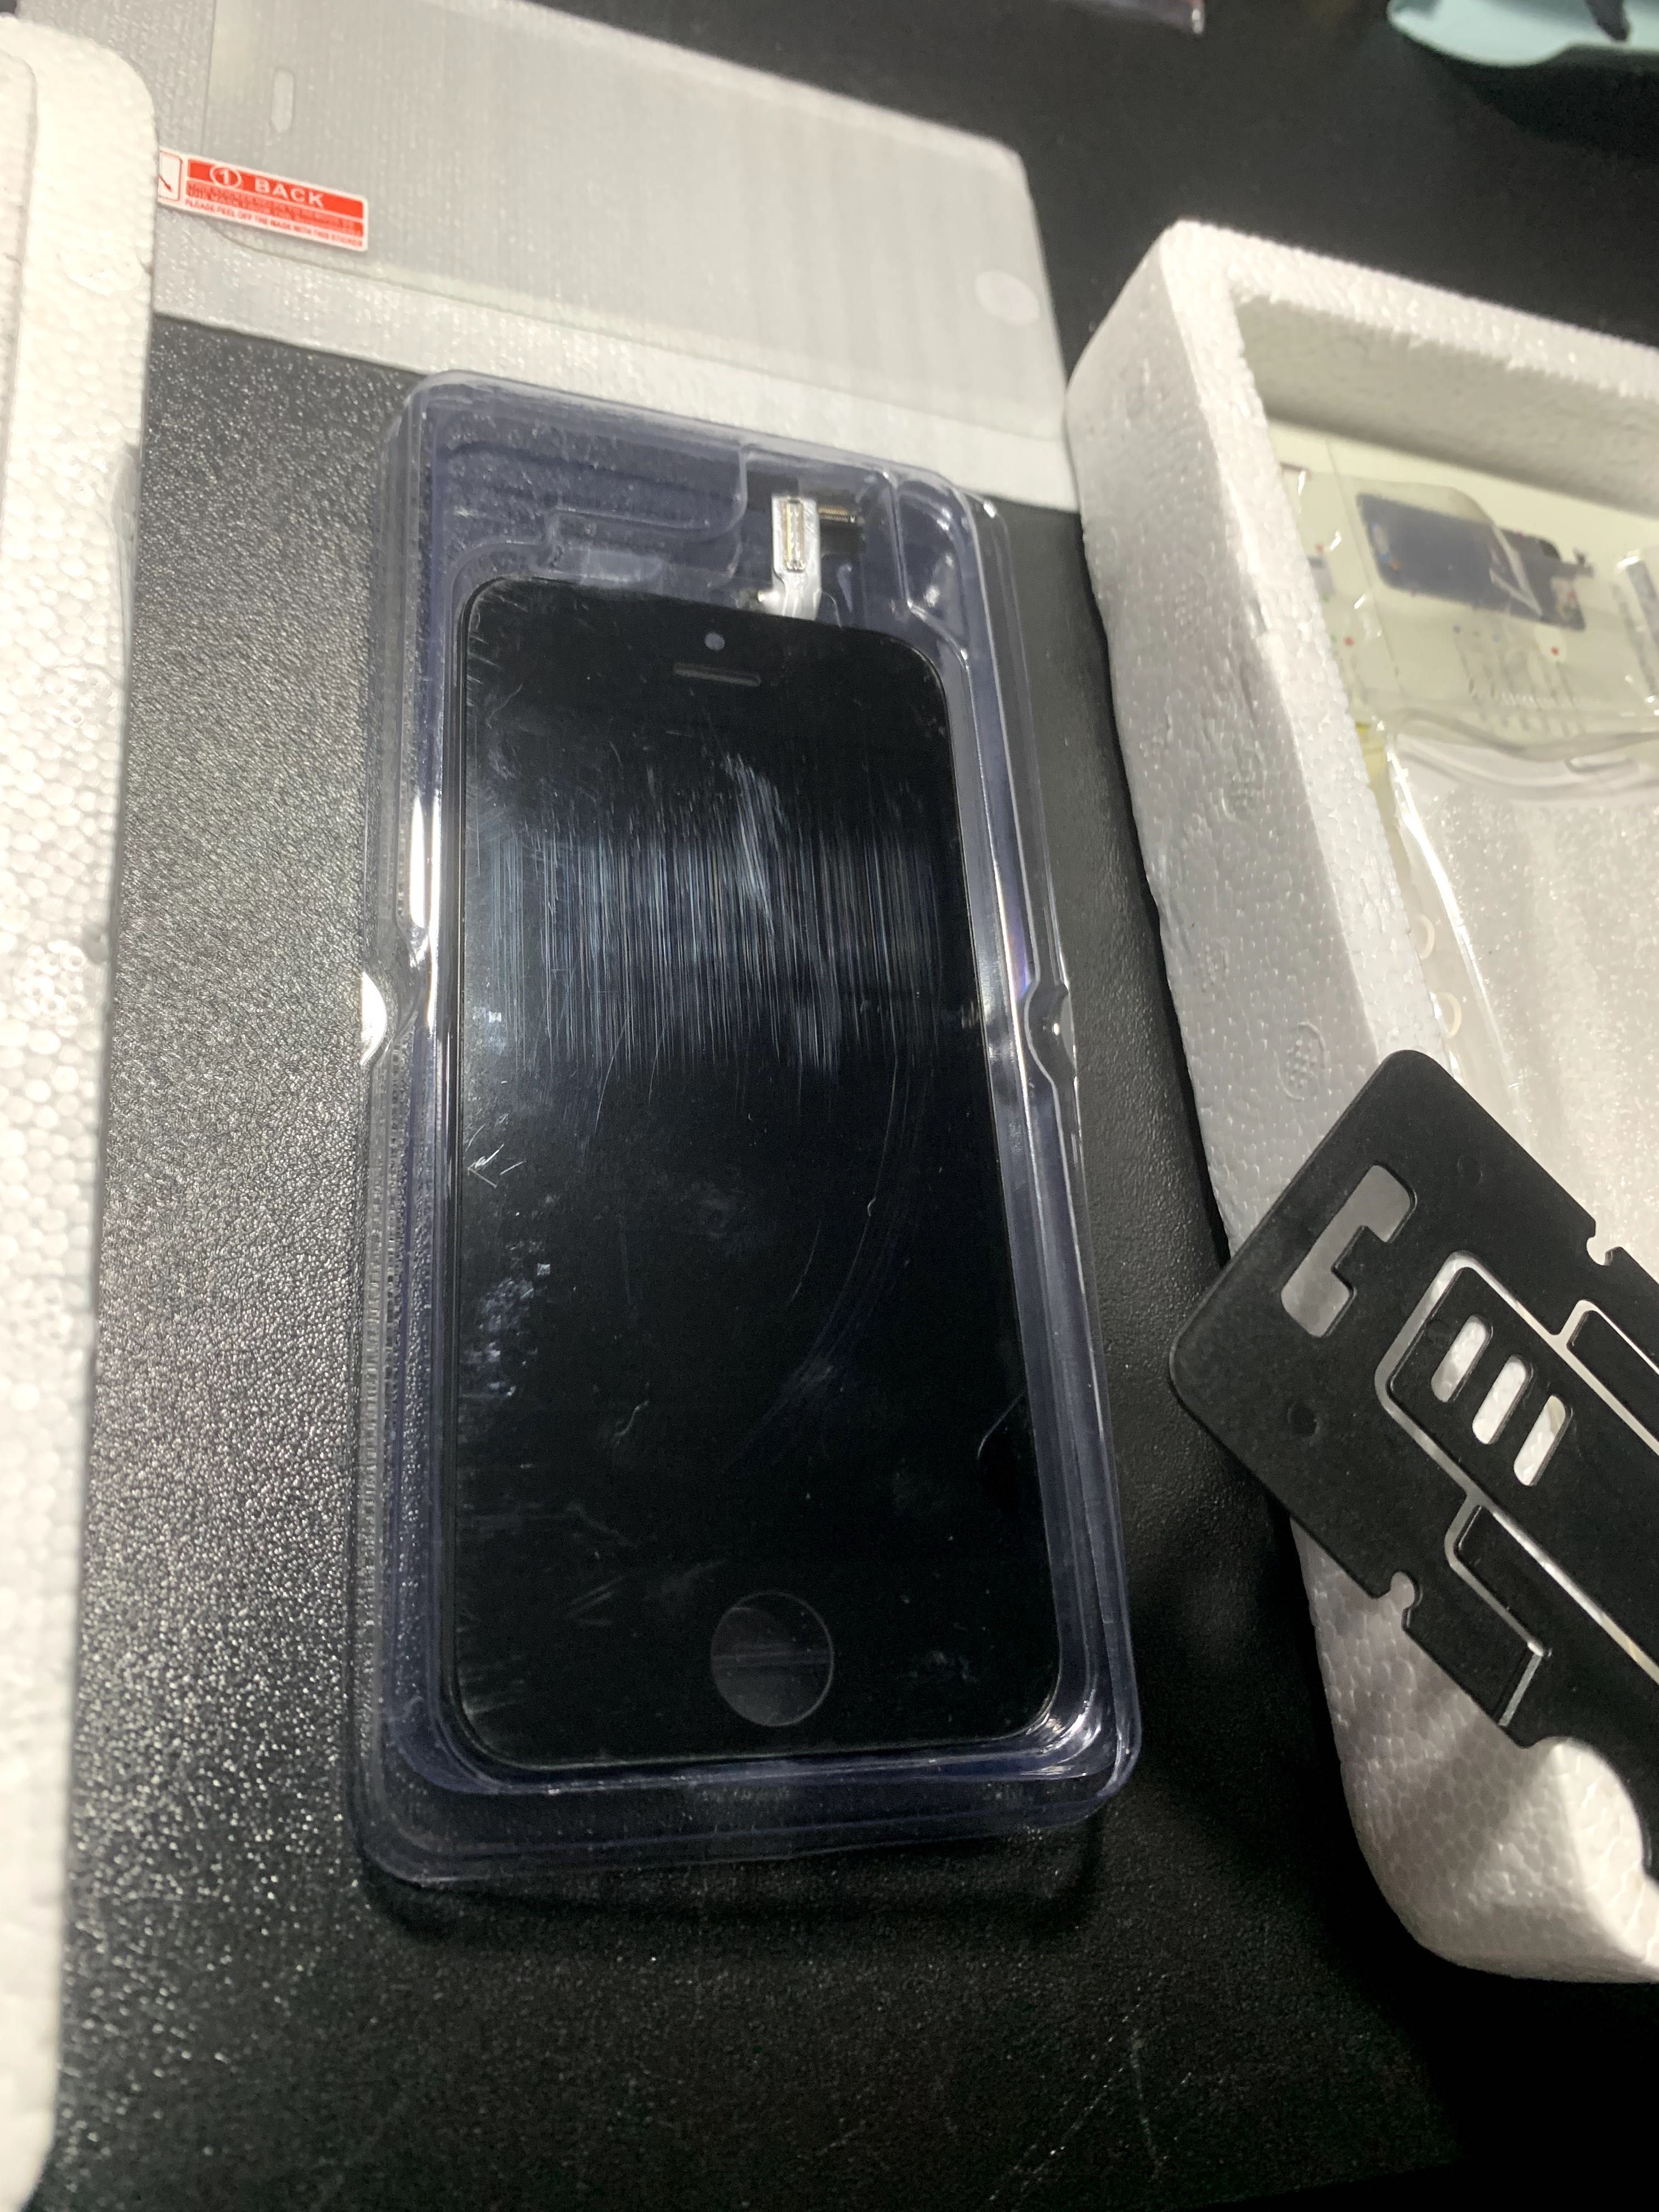 iPhone 5S Black LCD ecrã (+ película e capa)